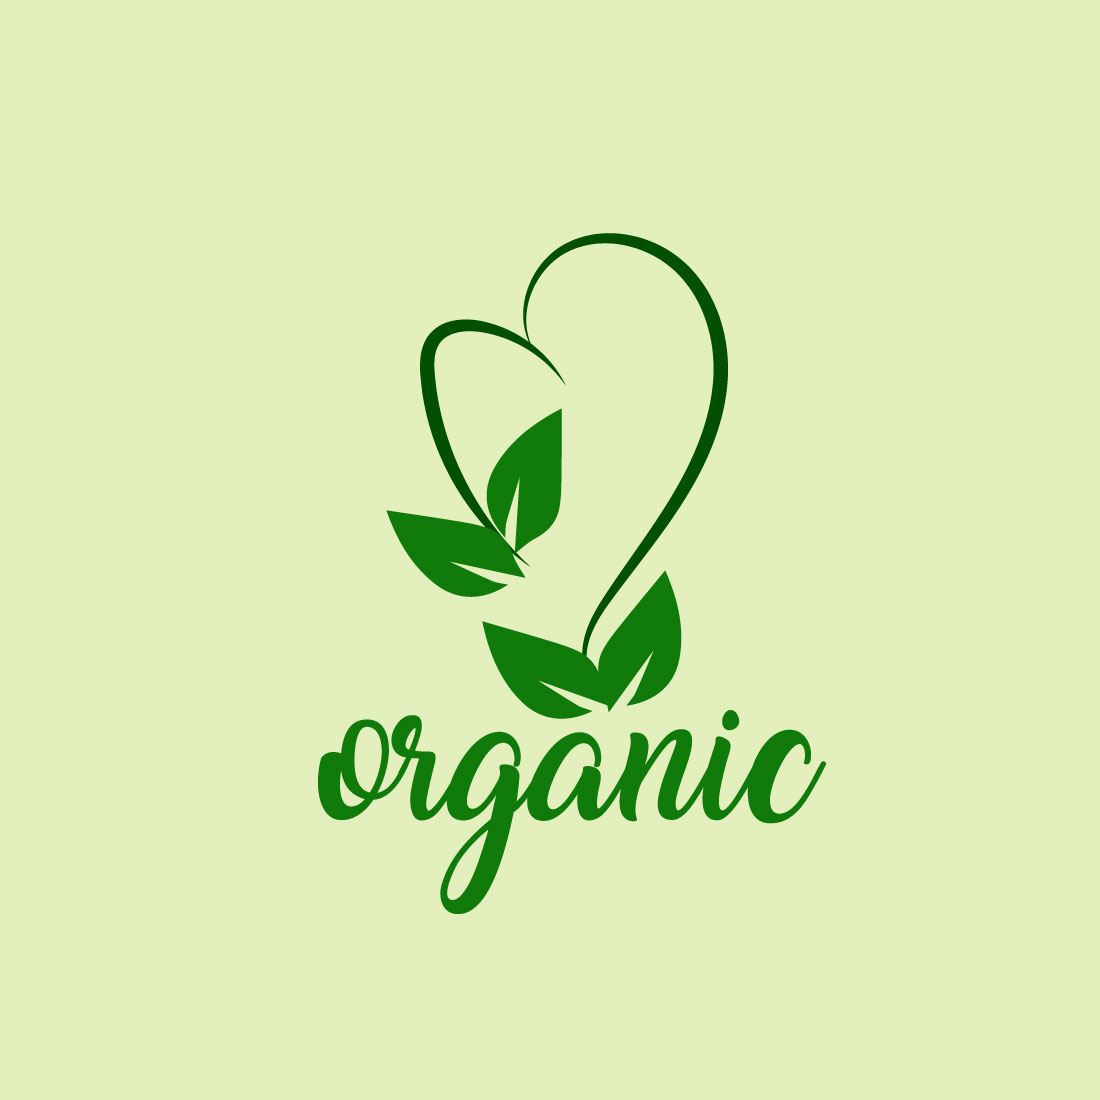 Free botanical elements organic logo preview image.